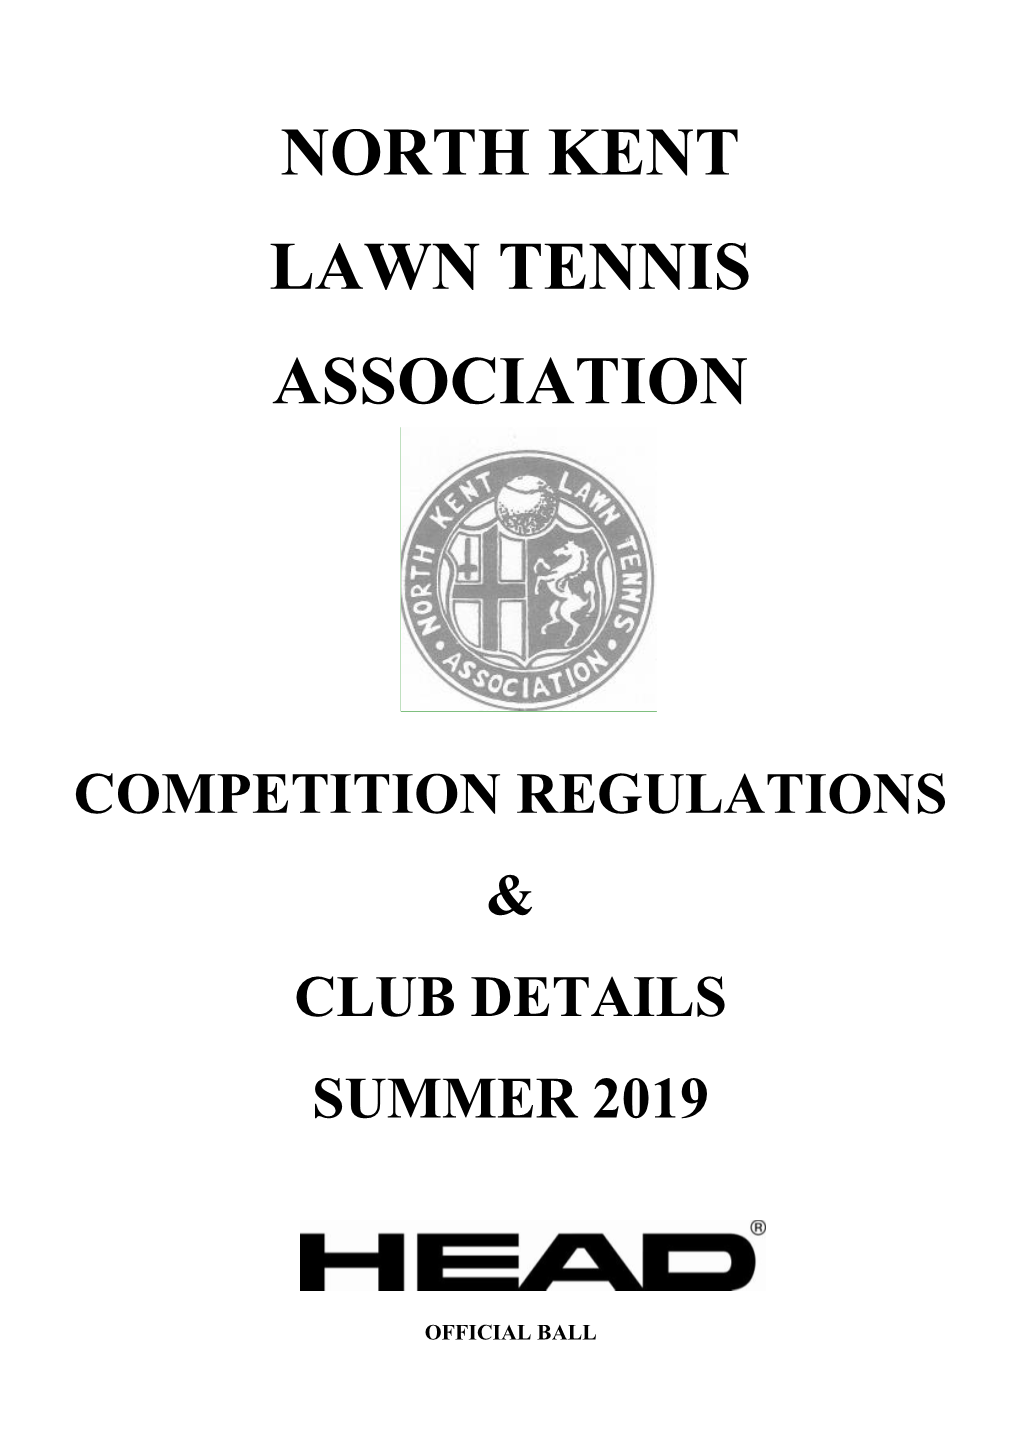 North Kent Lawn Tennis Association